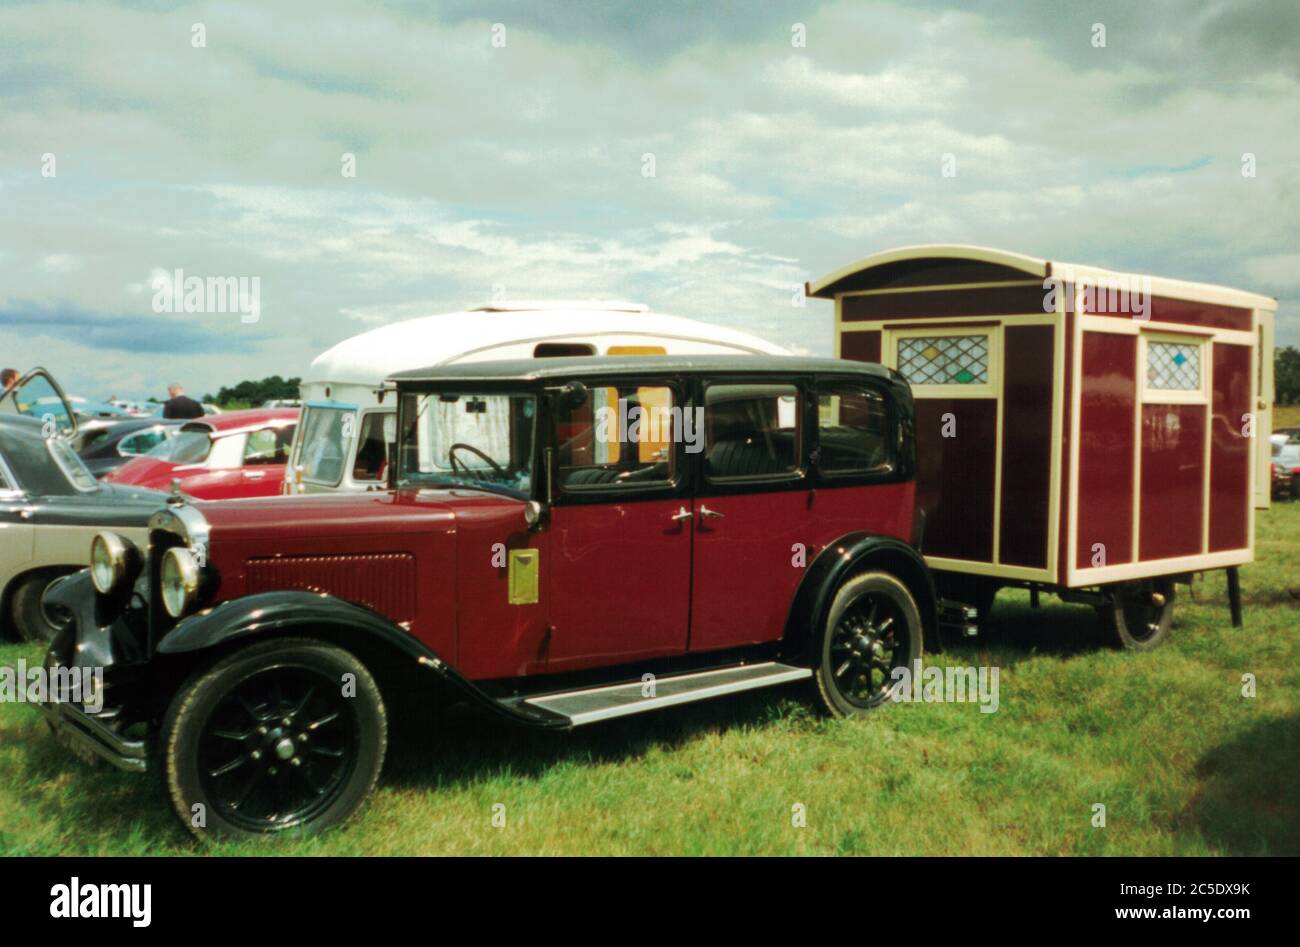 Vintage Car Towing a Caravan Stock Photo